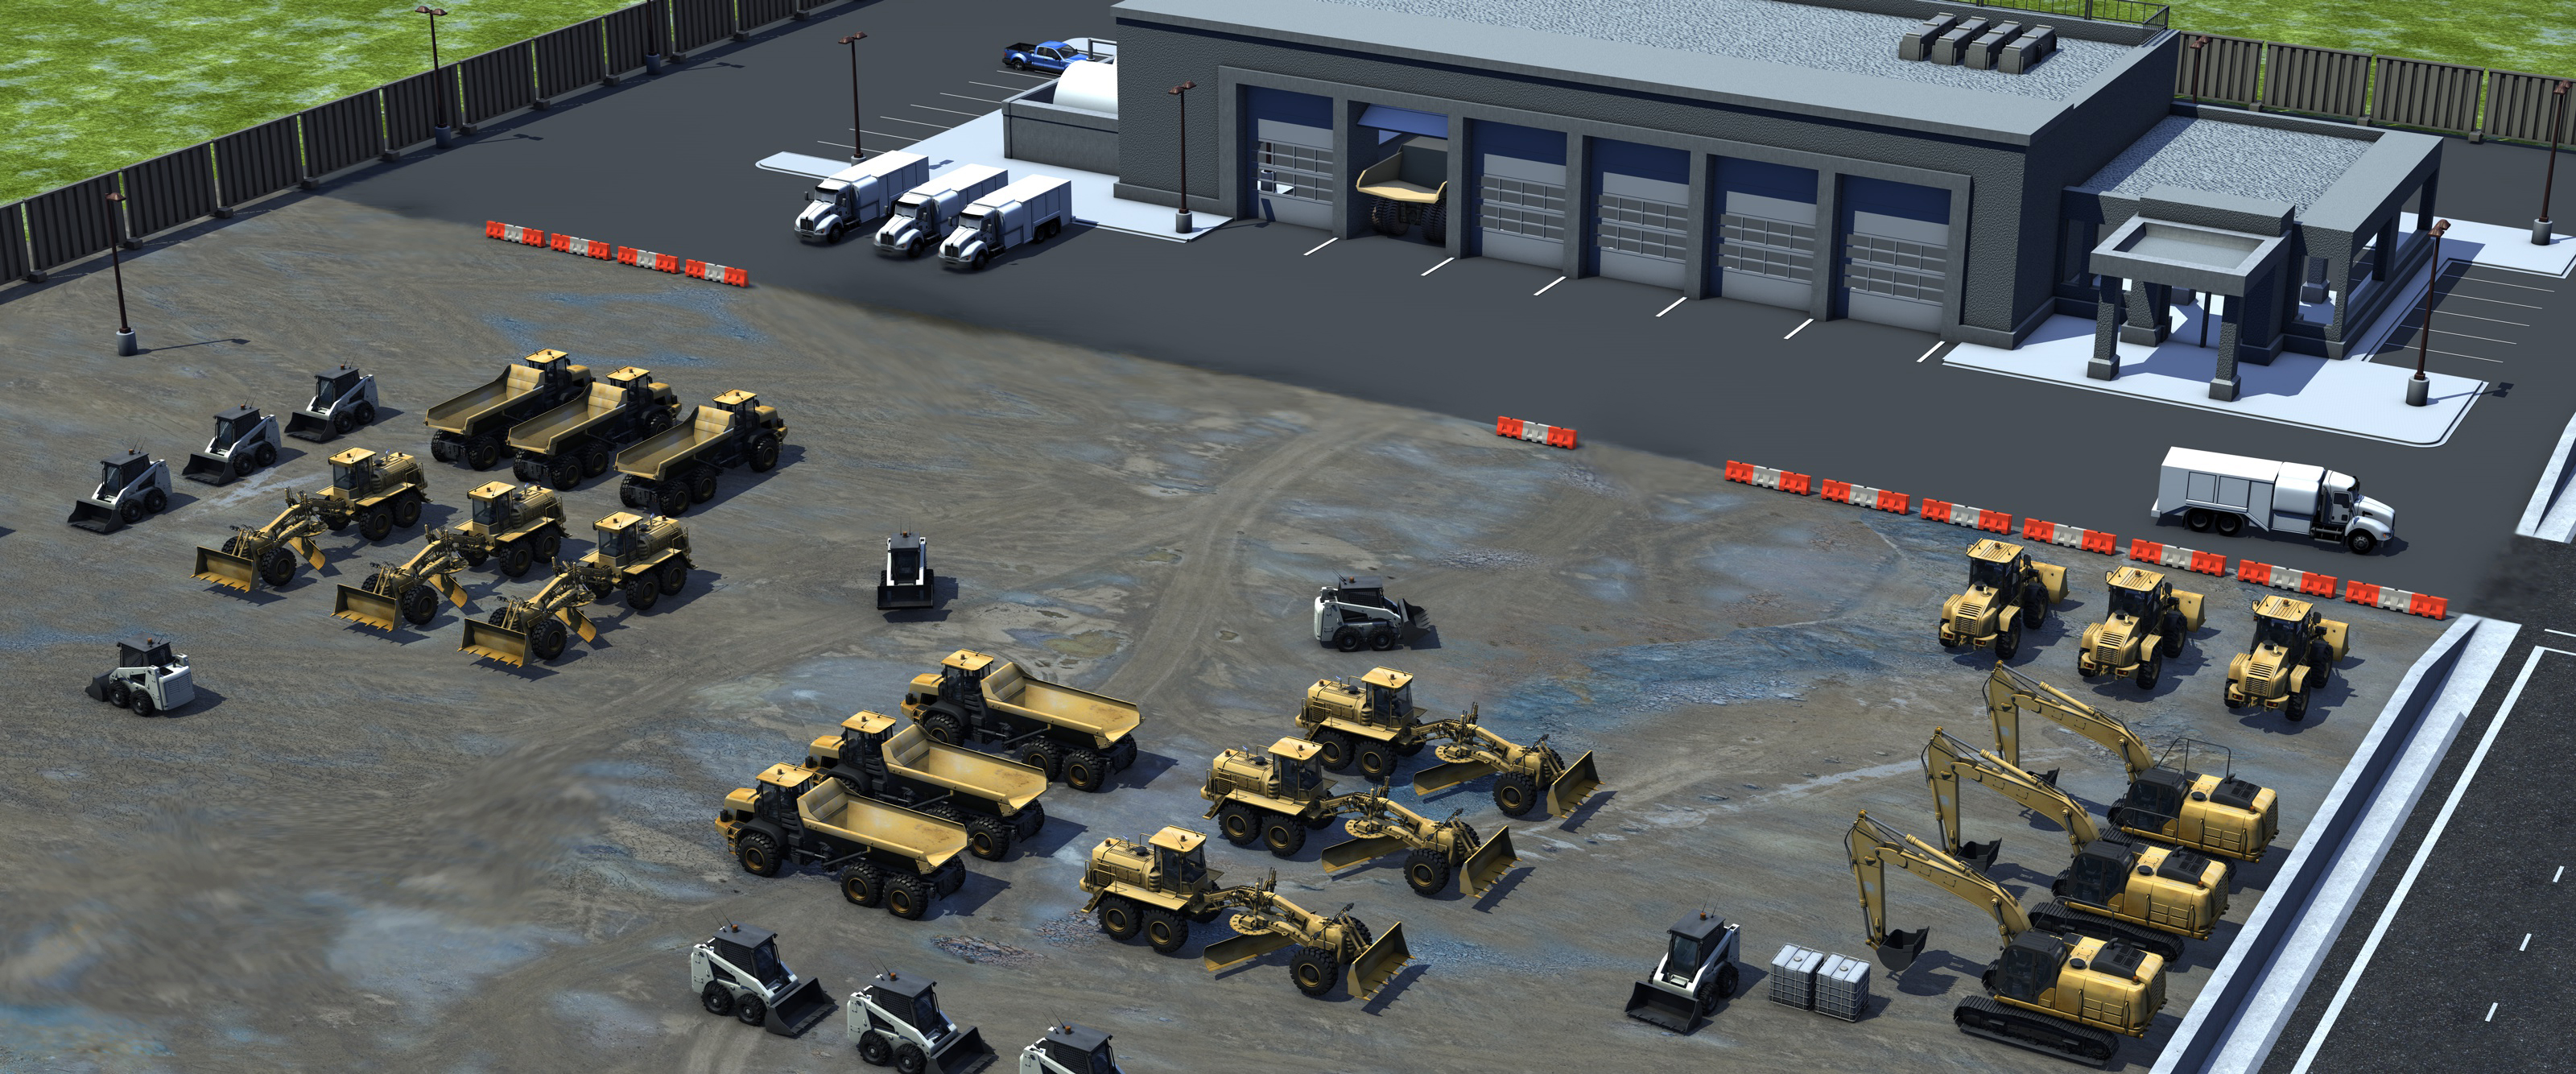 Mining image showing a mining workshop, processing facility, conveyor belt and crusher, electric shovel, haul trucks, lube trucks, excavators, dozer, wheel loaders and grader.